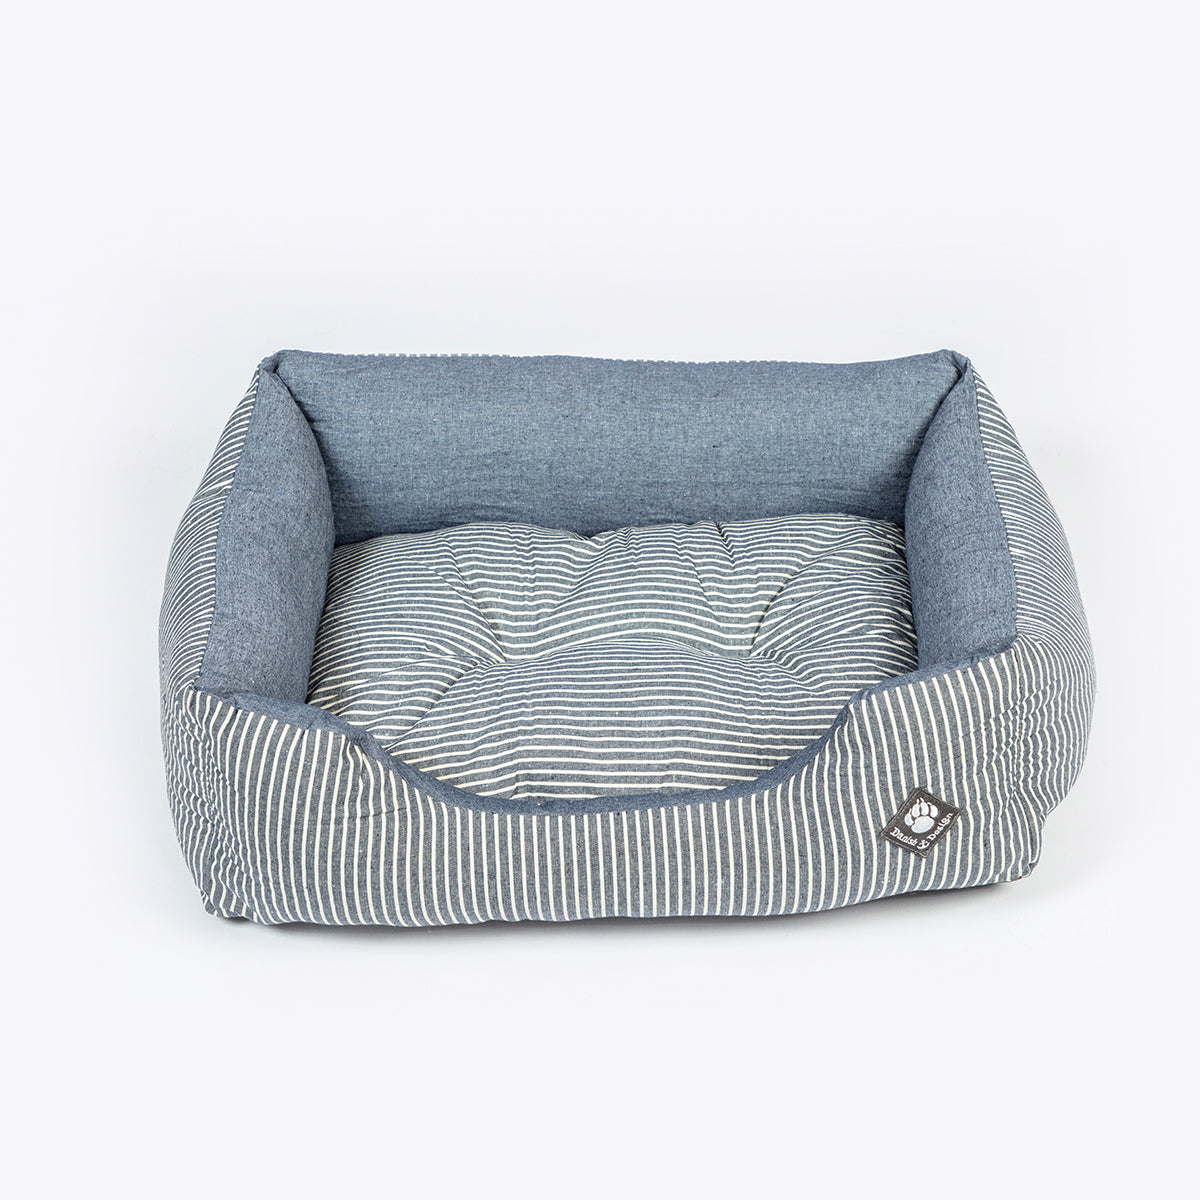 Image of Danish Design Maritime Blue Snuggle Dog Bed - Medium 23 inches